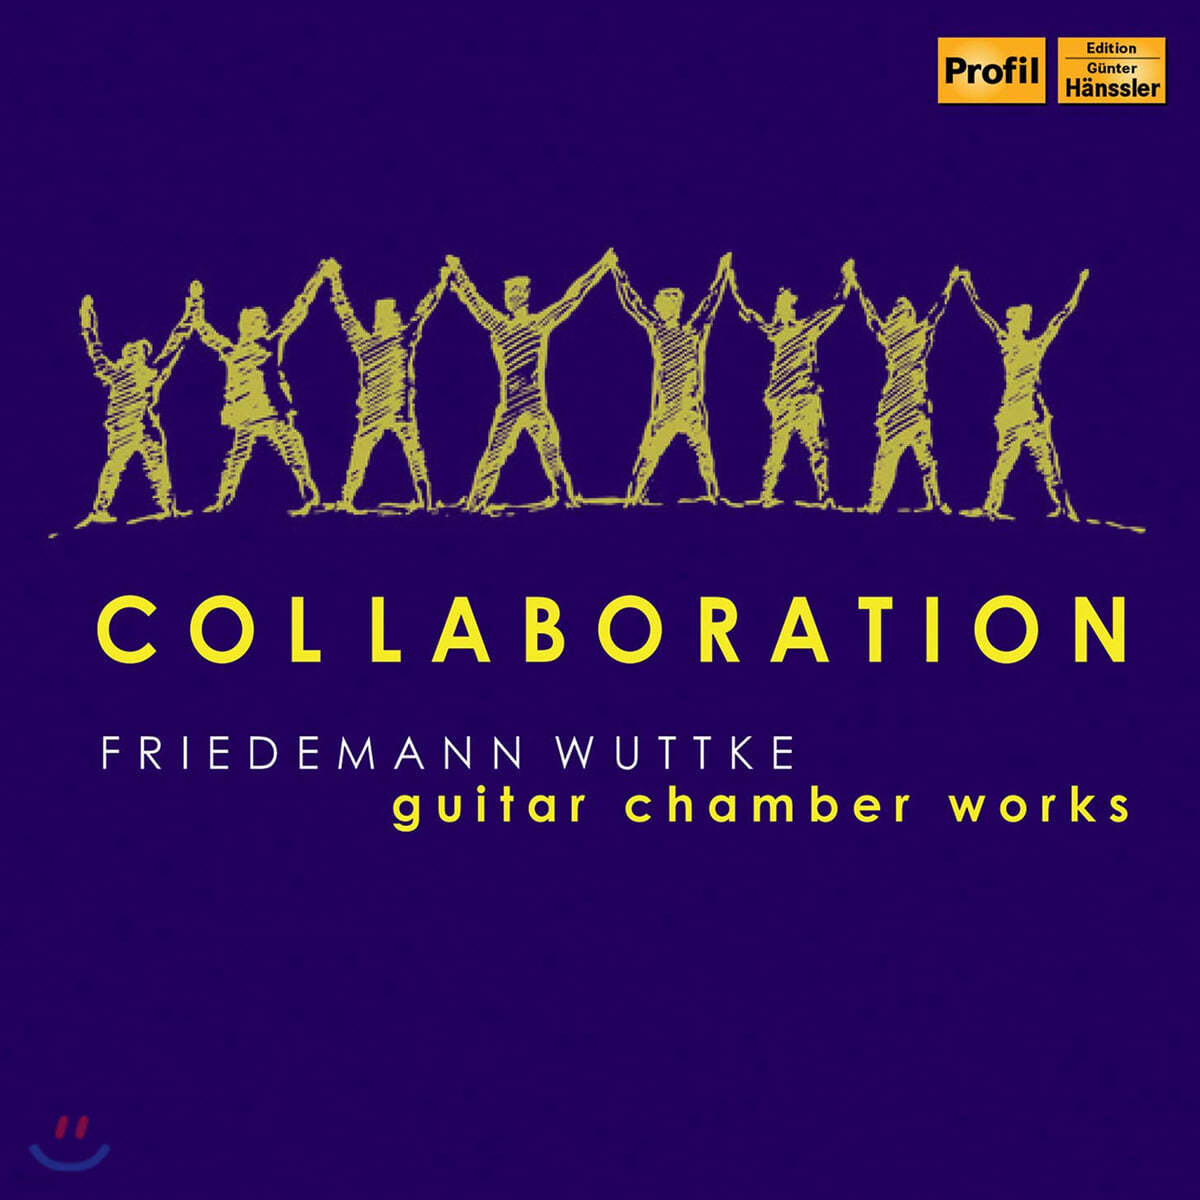 Friedemann Wuttke &#39;콜라보레이션&#39; - 기타와 함께 하는 다양한 음악들 (Collaboration - Guitar Chamber Works)